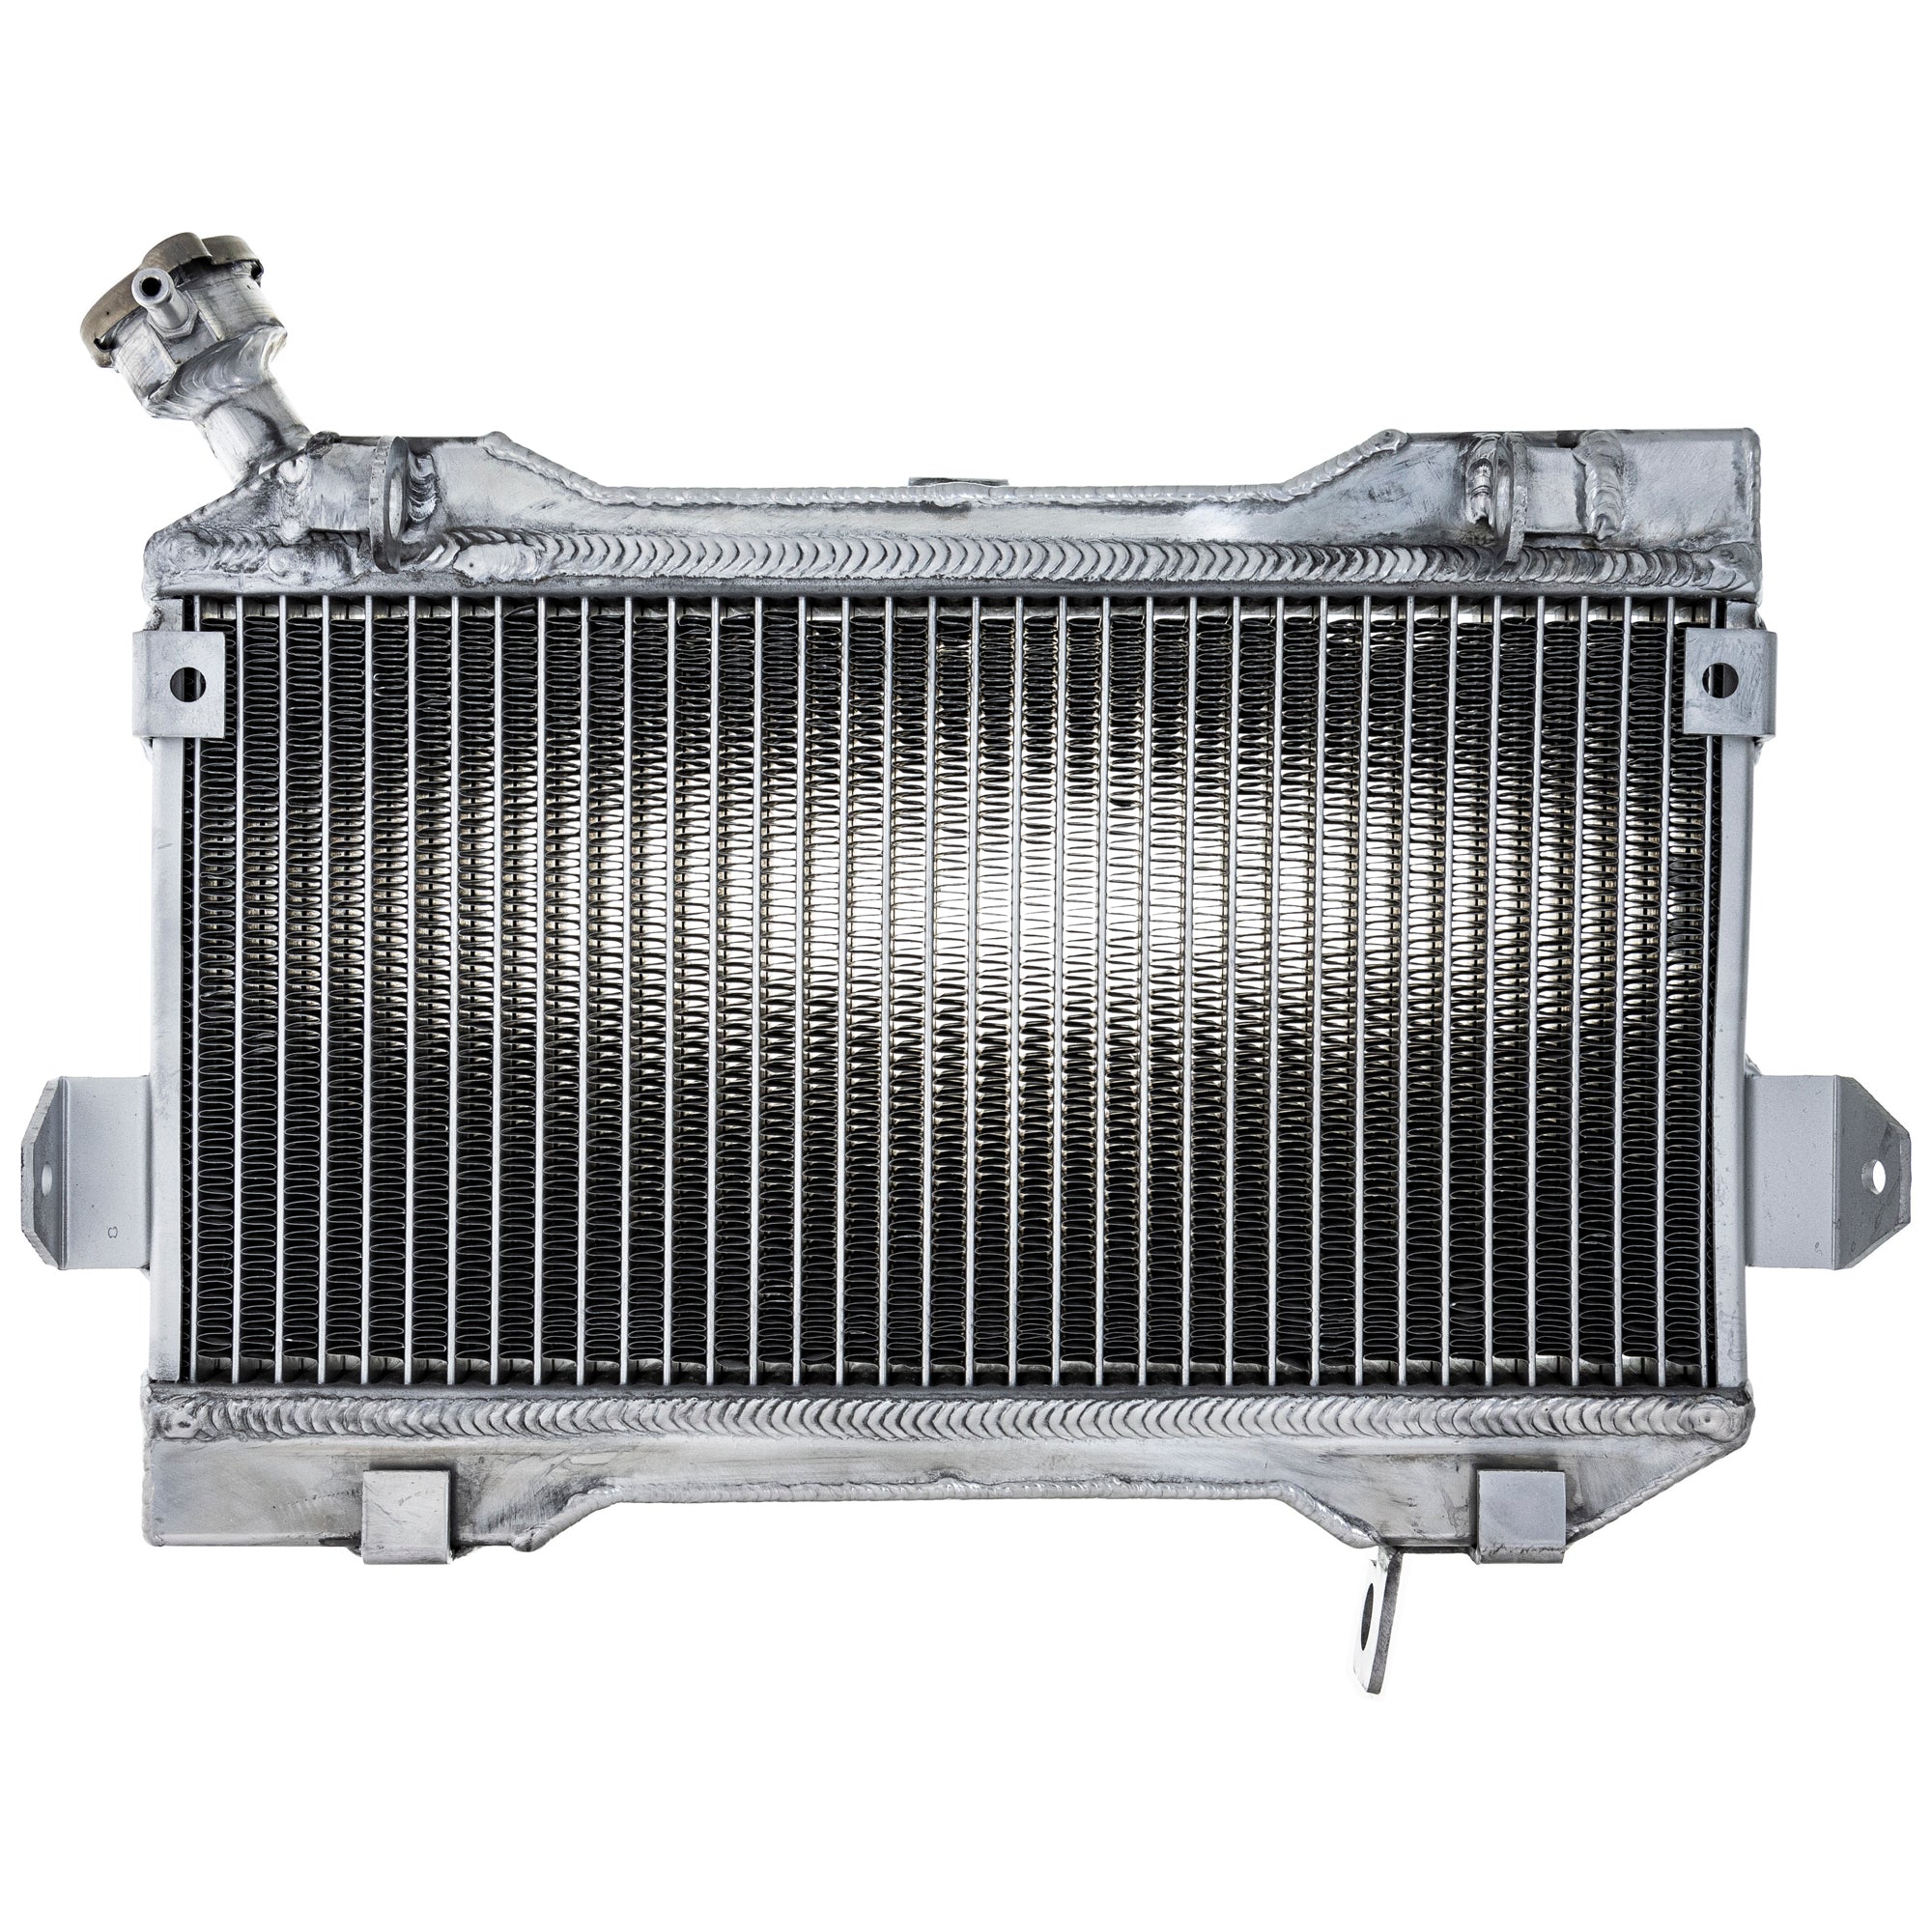 Radiator for Suzuki Quadracer 450 LTR450 17710-45G00 2 Row with Cap